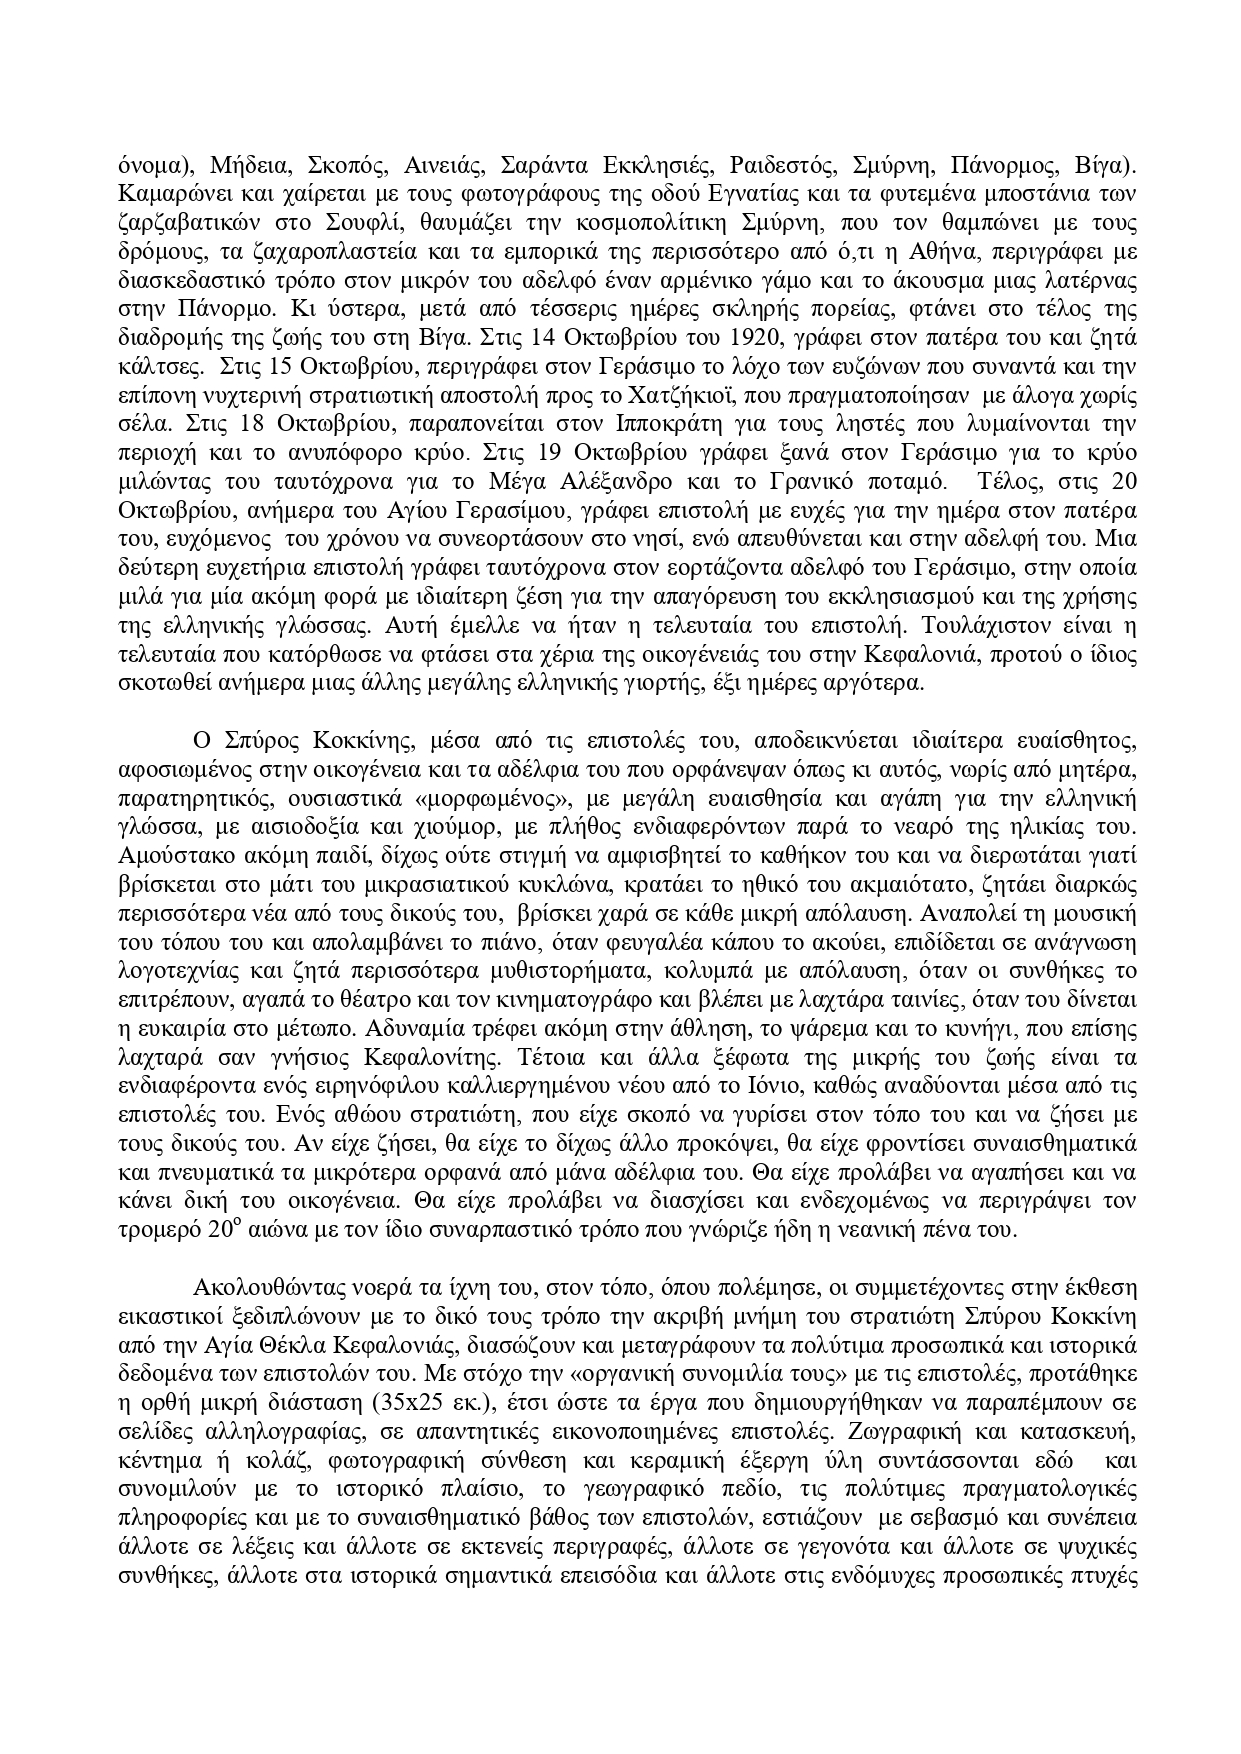 STRATIOTIS CEFALONIA PRESS RELEASE page 0003